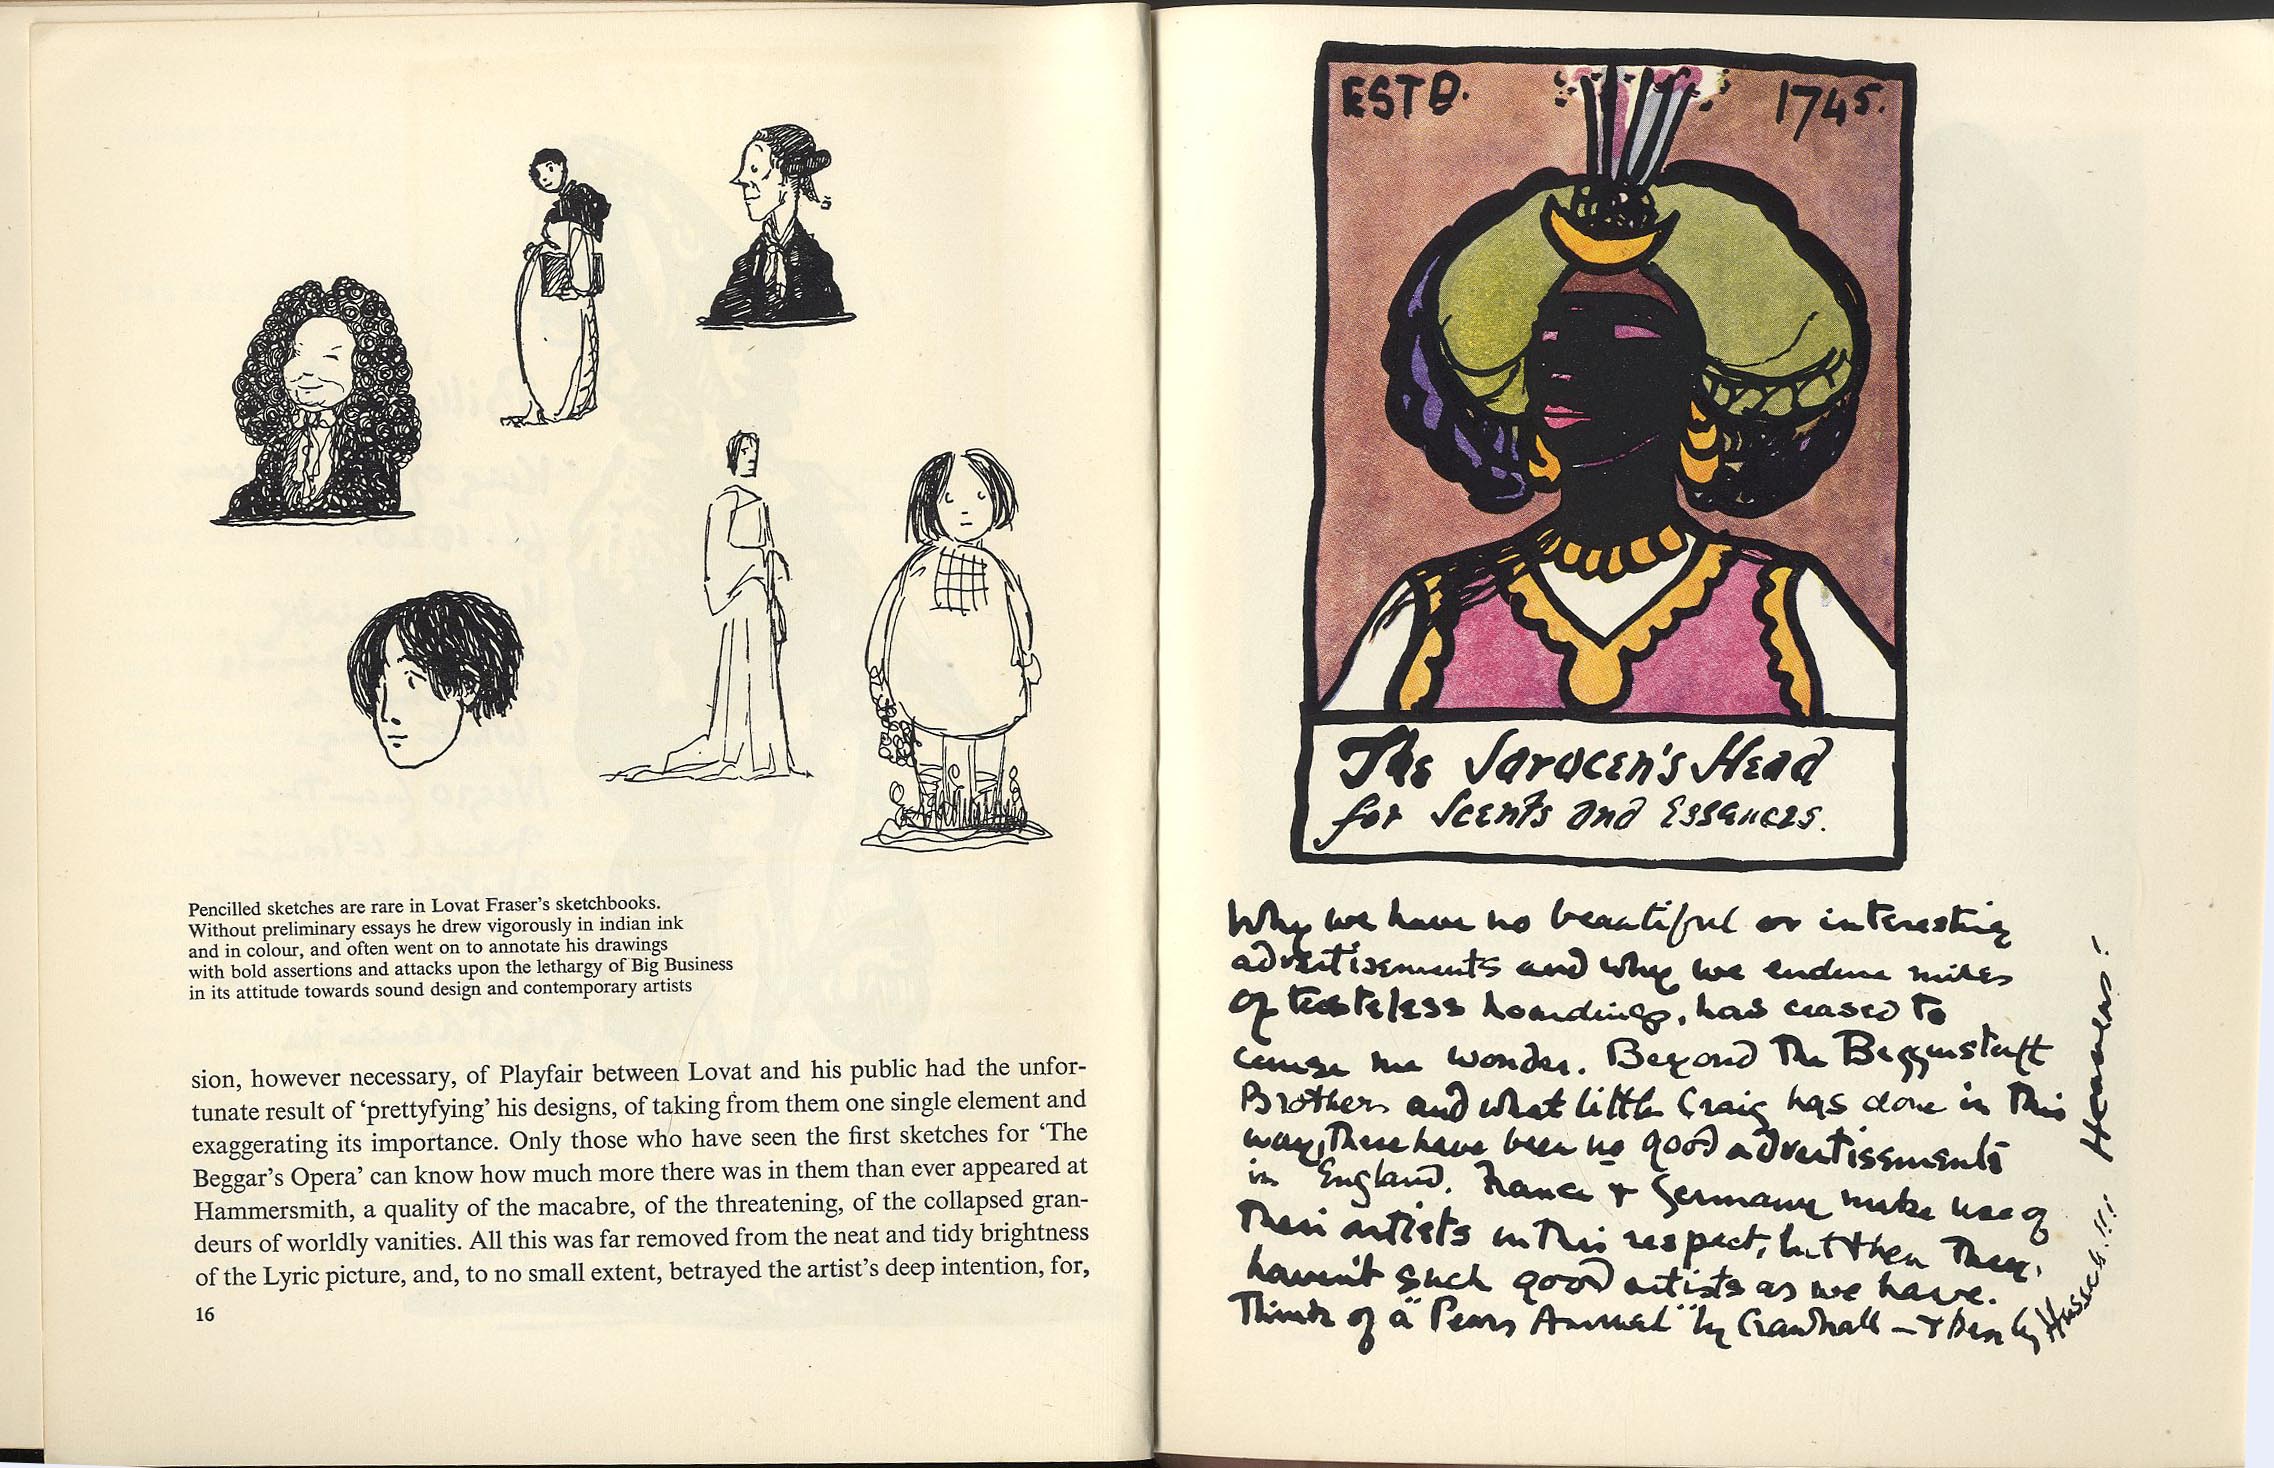 The Sketchbooks of Claud Lovat Fraser, Alphabet and Image 1948